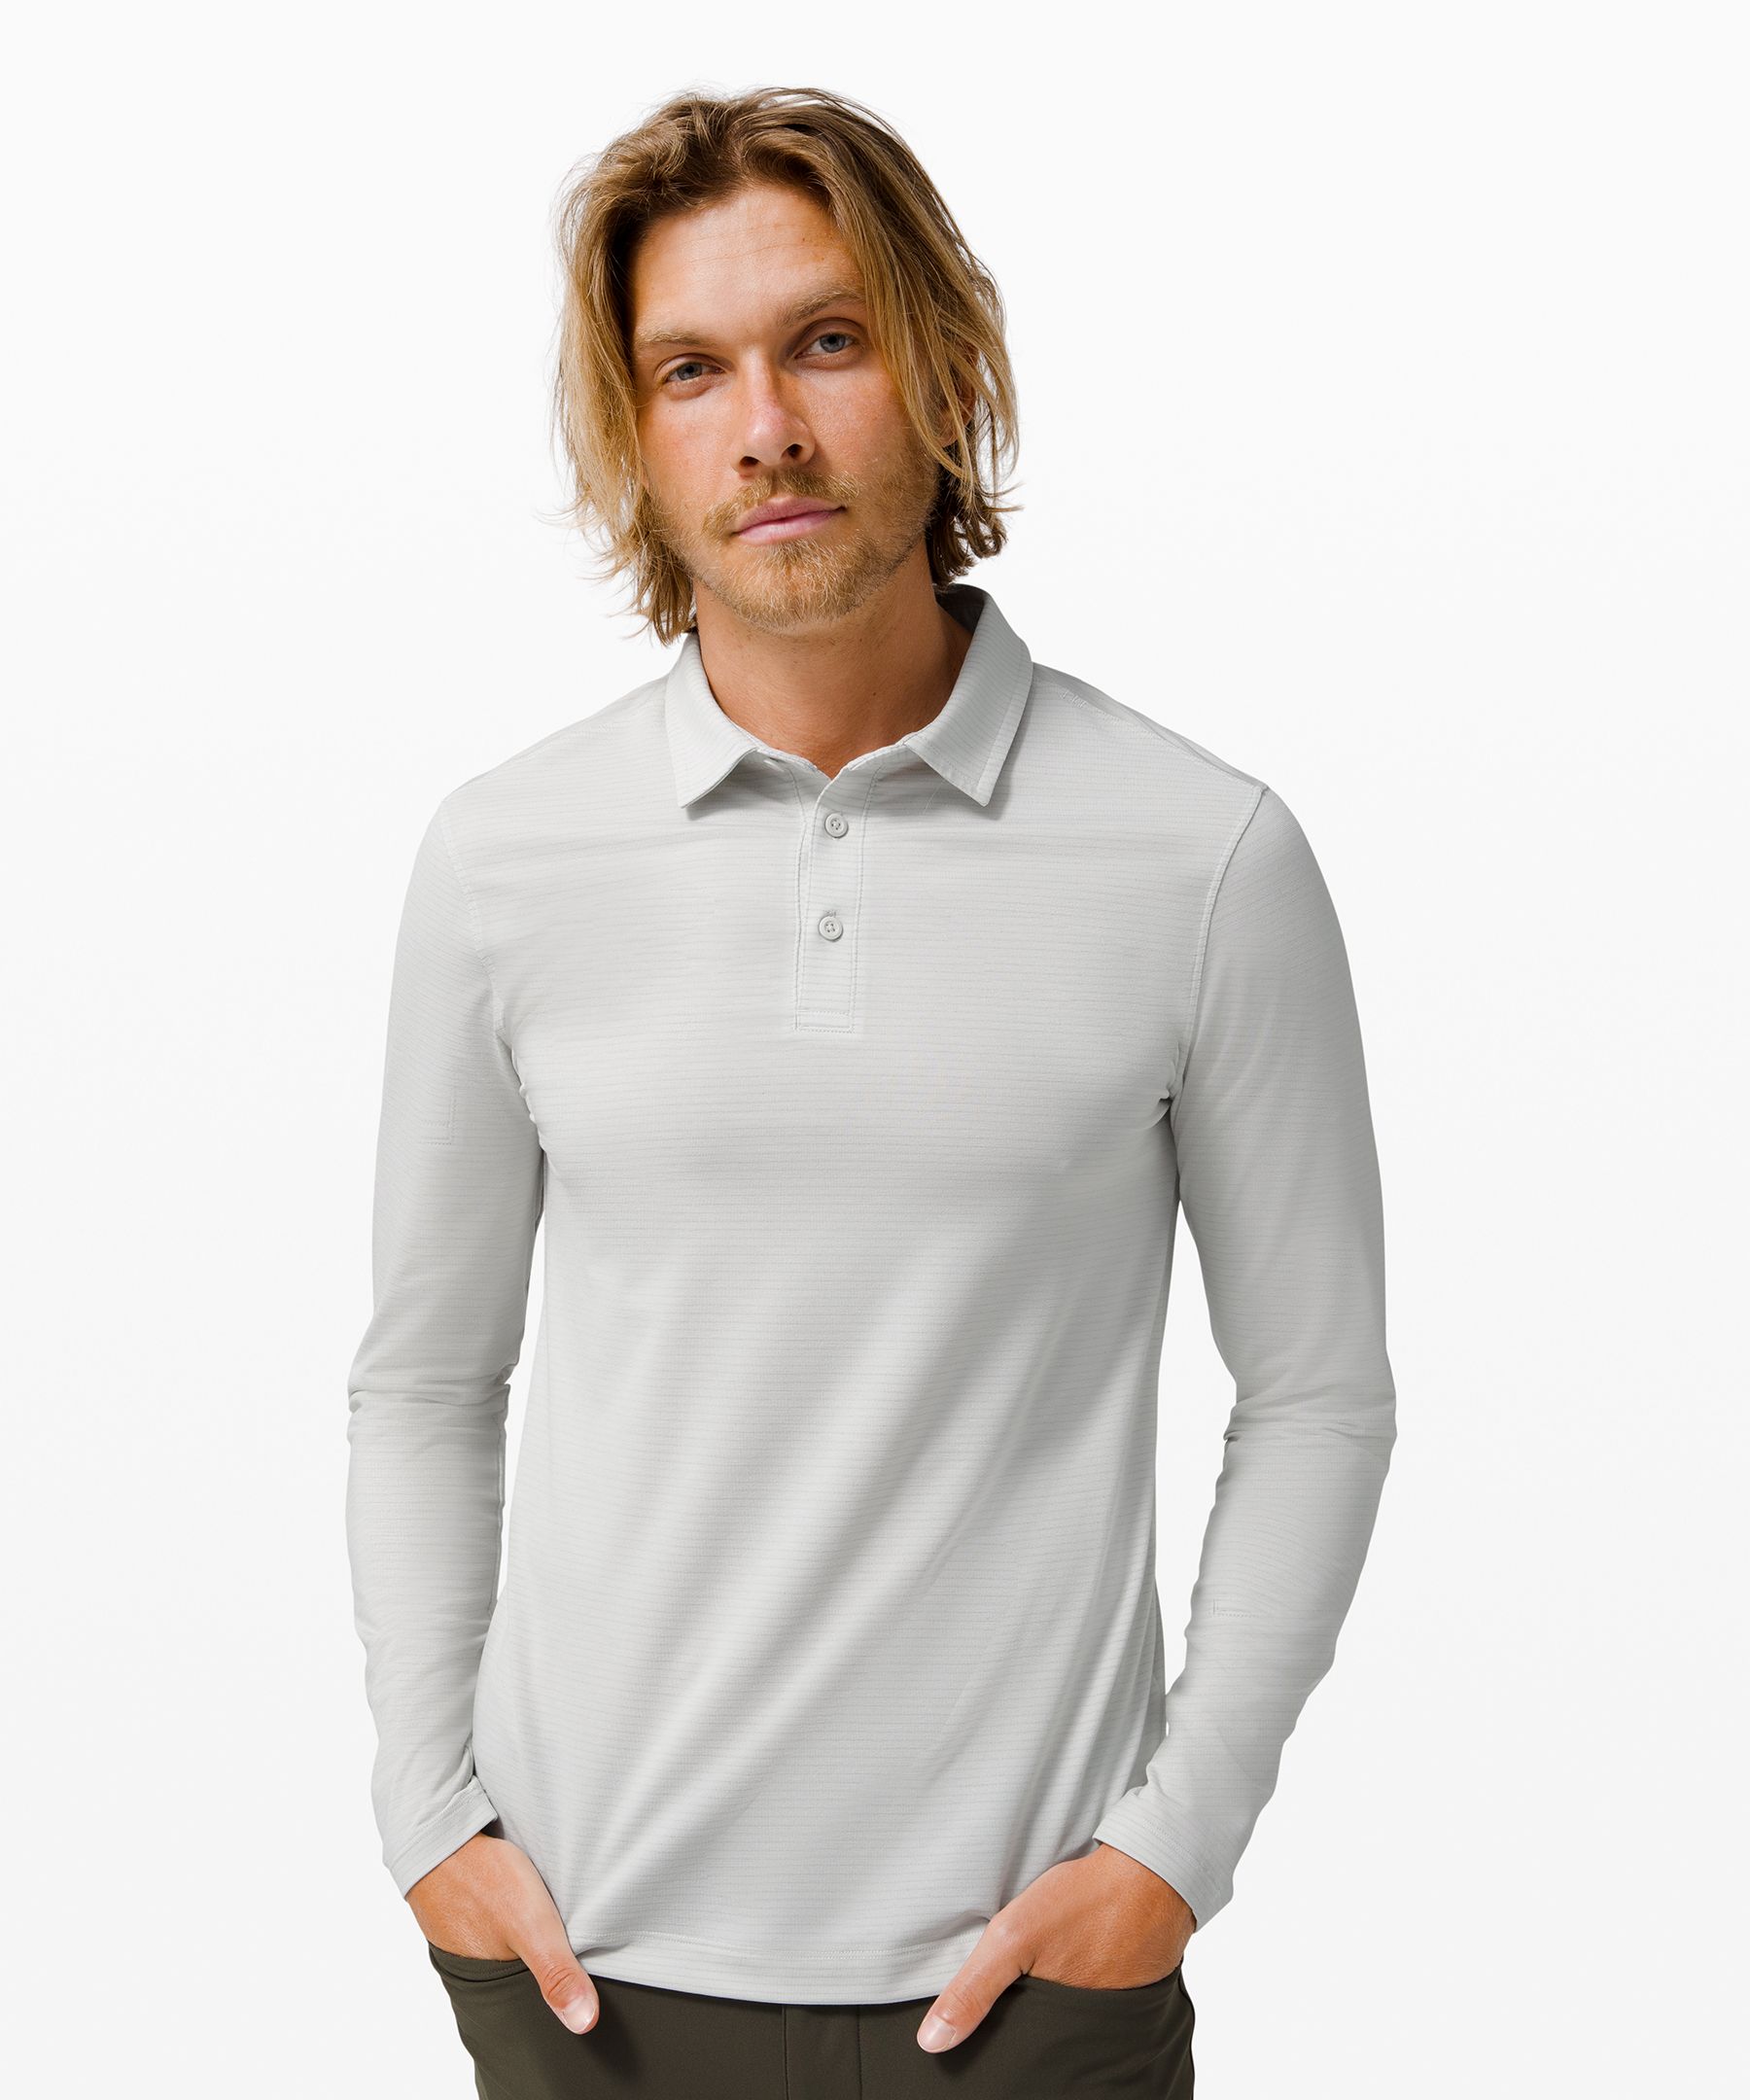 Men's Golf Long Sleeve Shirts | lululemon